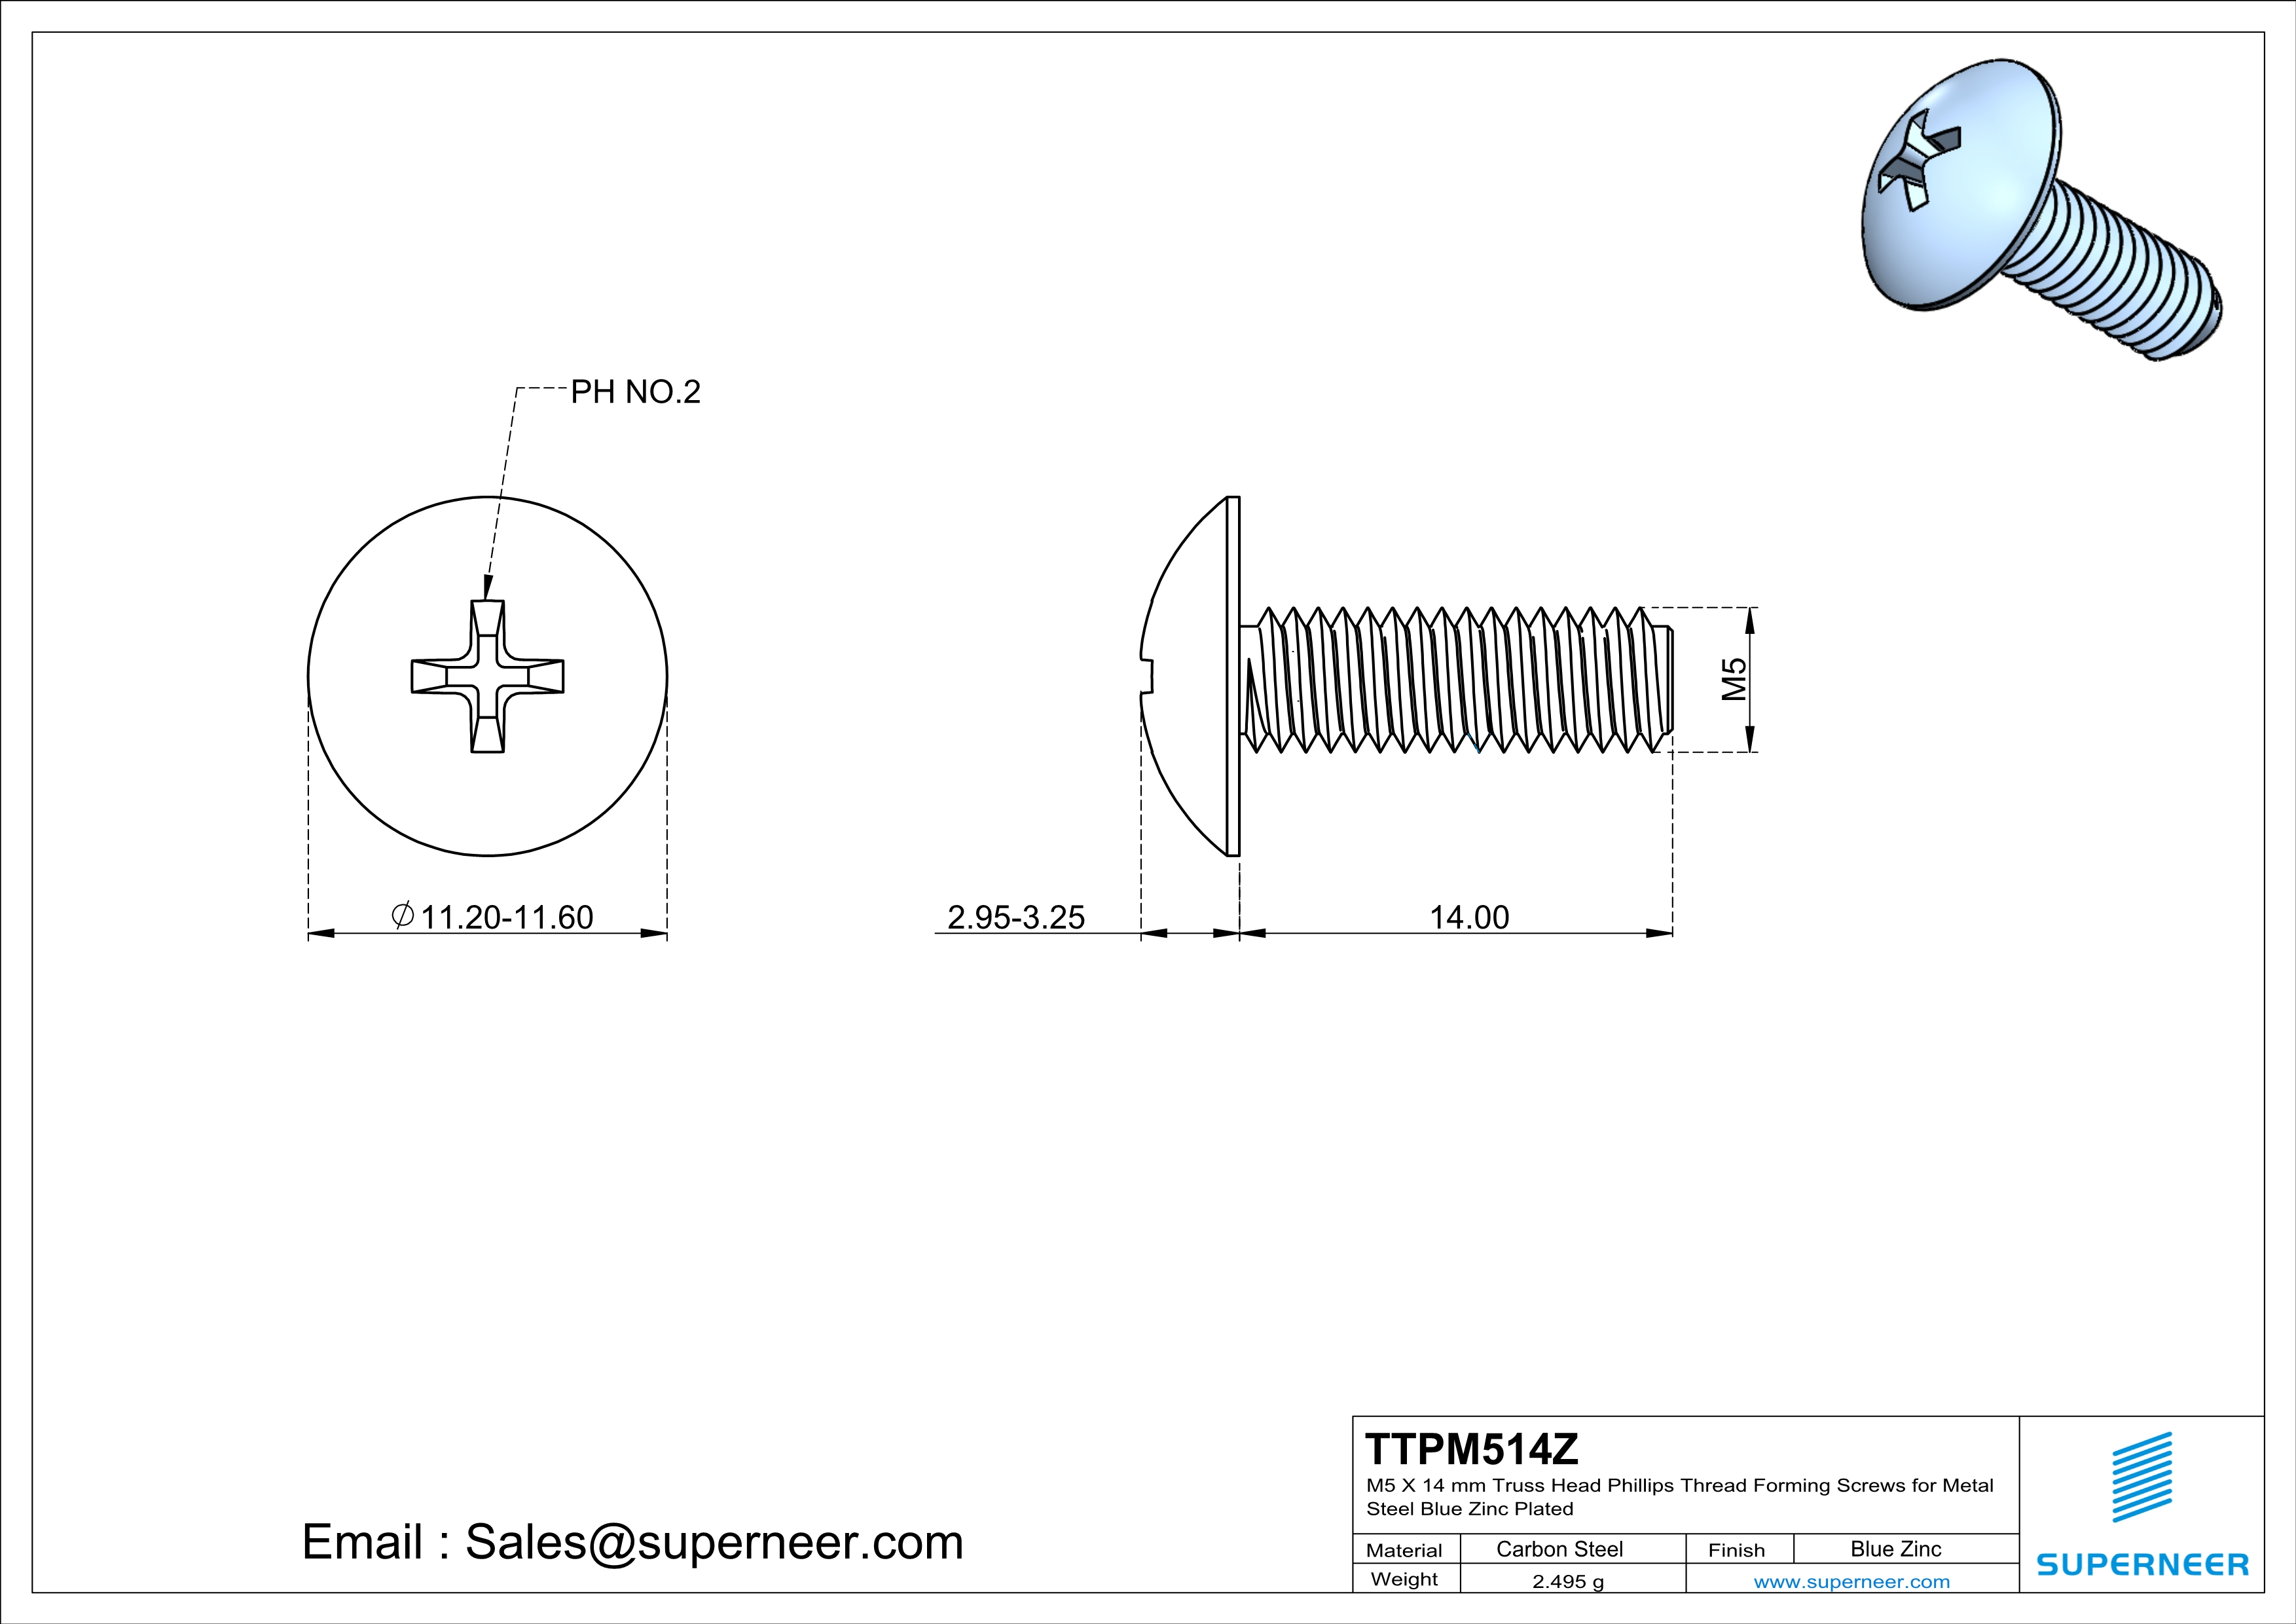 M5 × 14mm Truss Head Phillips Thread Forming Screws for Metal Steel Blue Zinc Plated